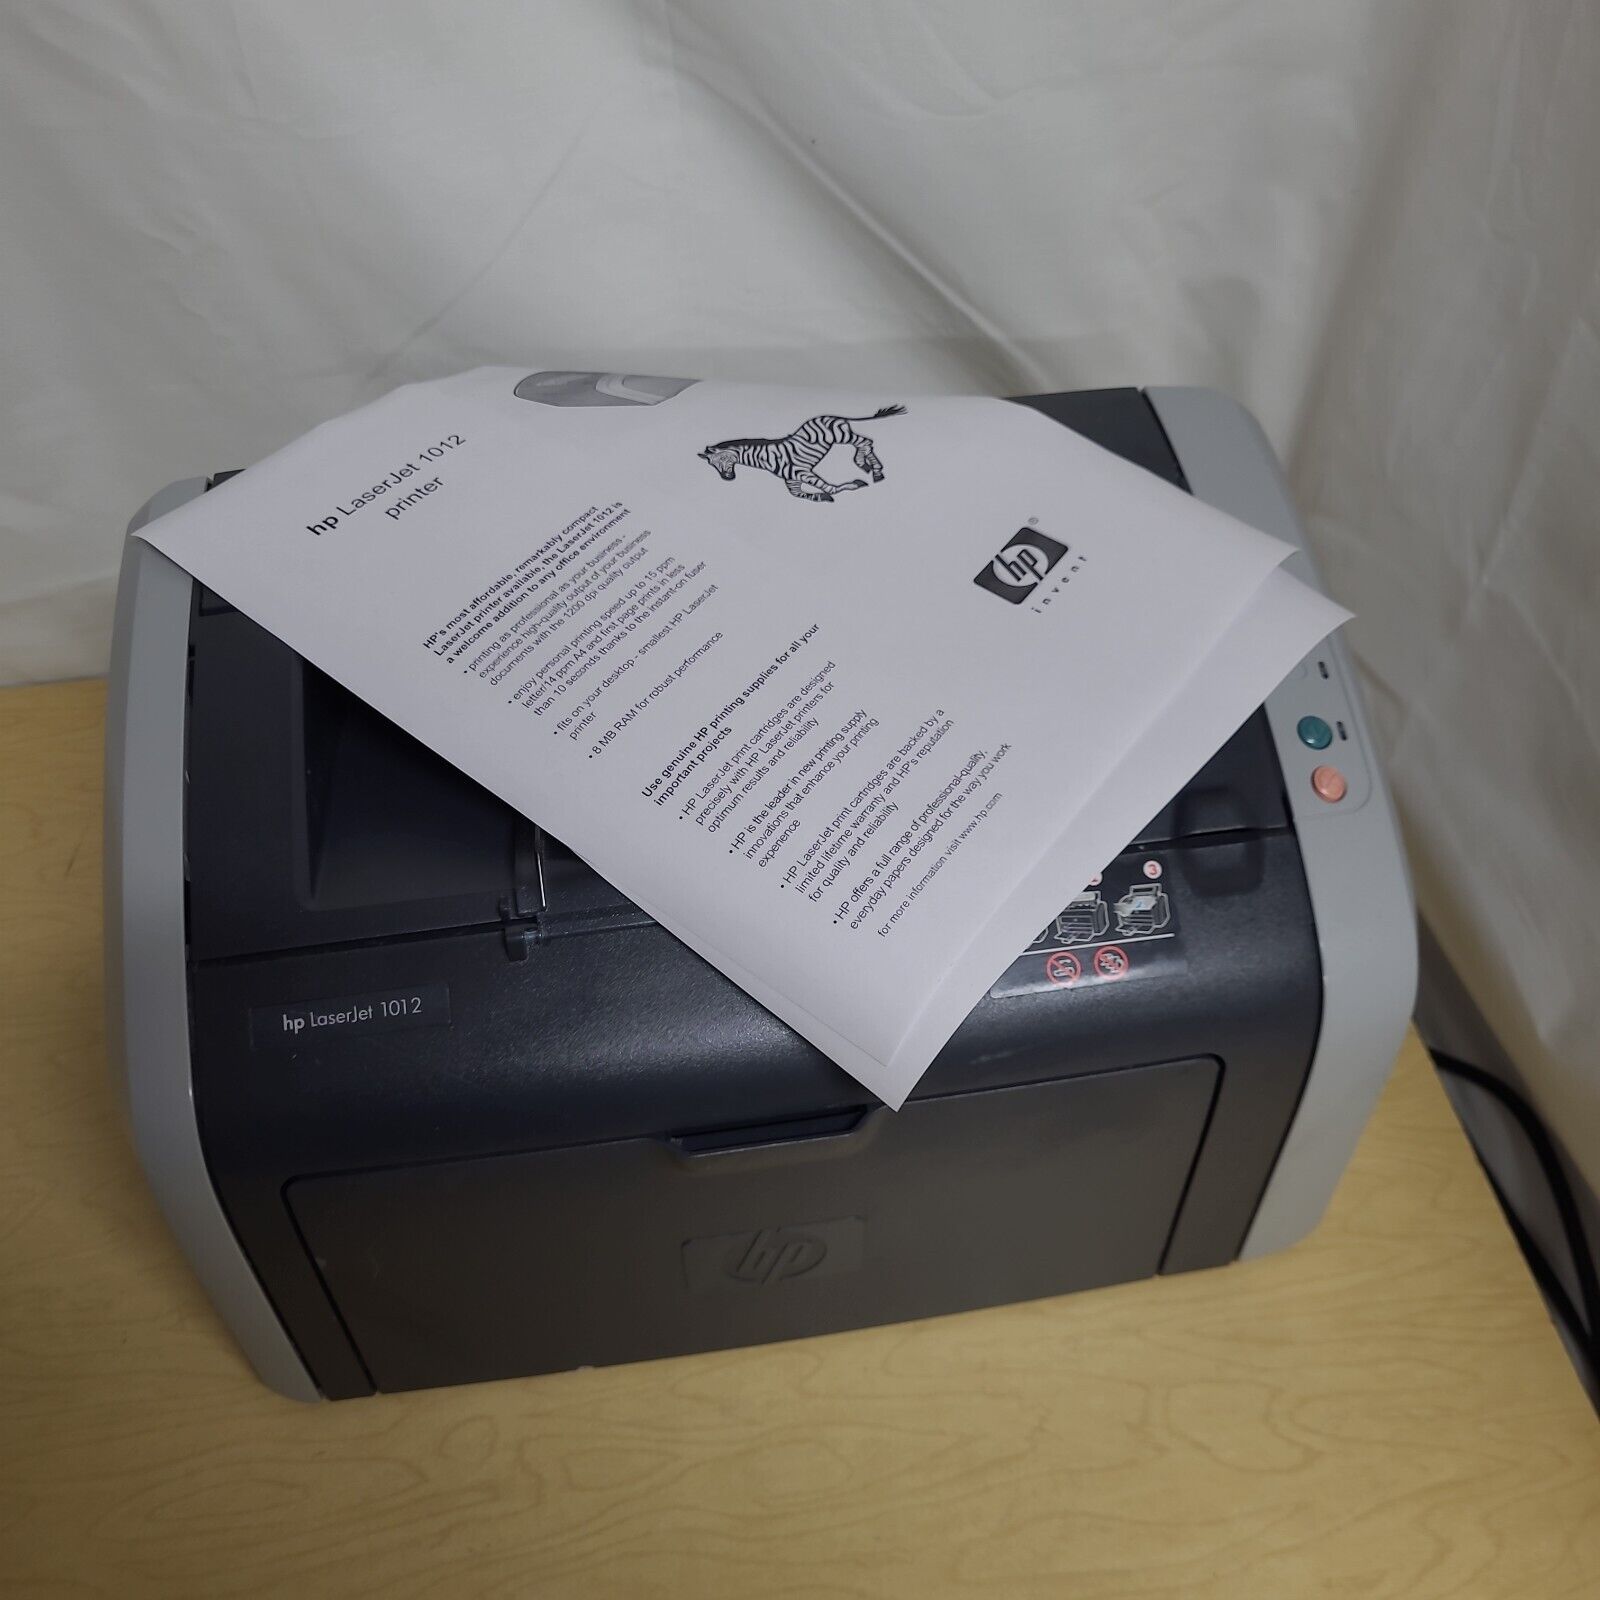 HP LaserJet 1012 Black White Laser Printer Compact Small w/ Toner